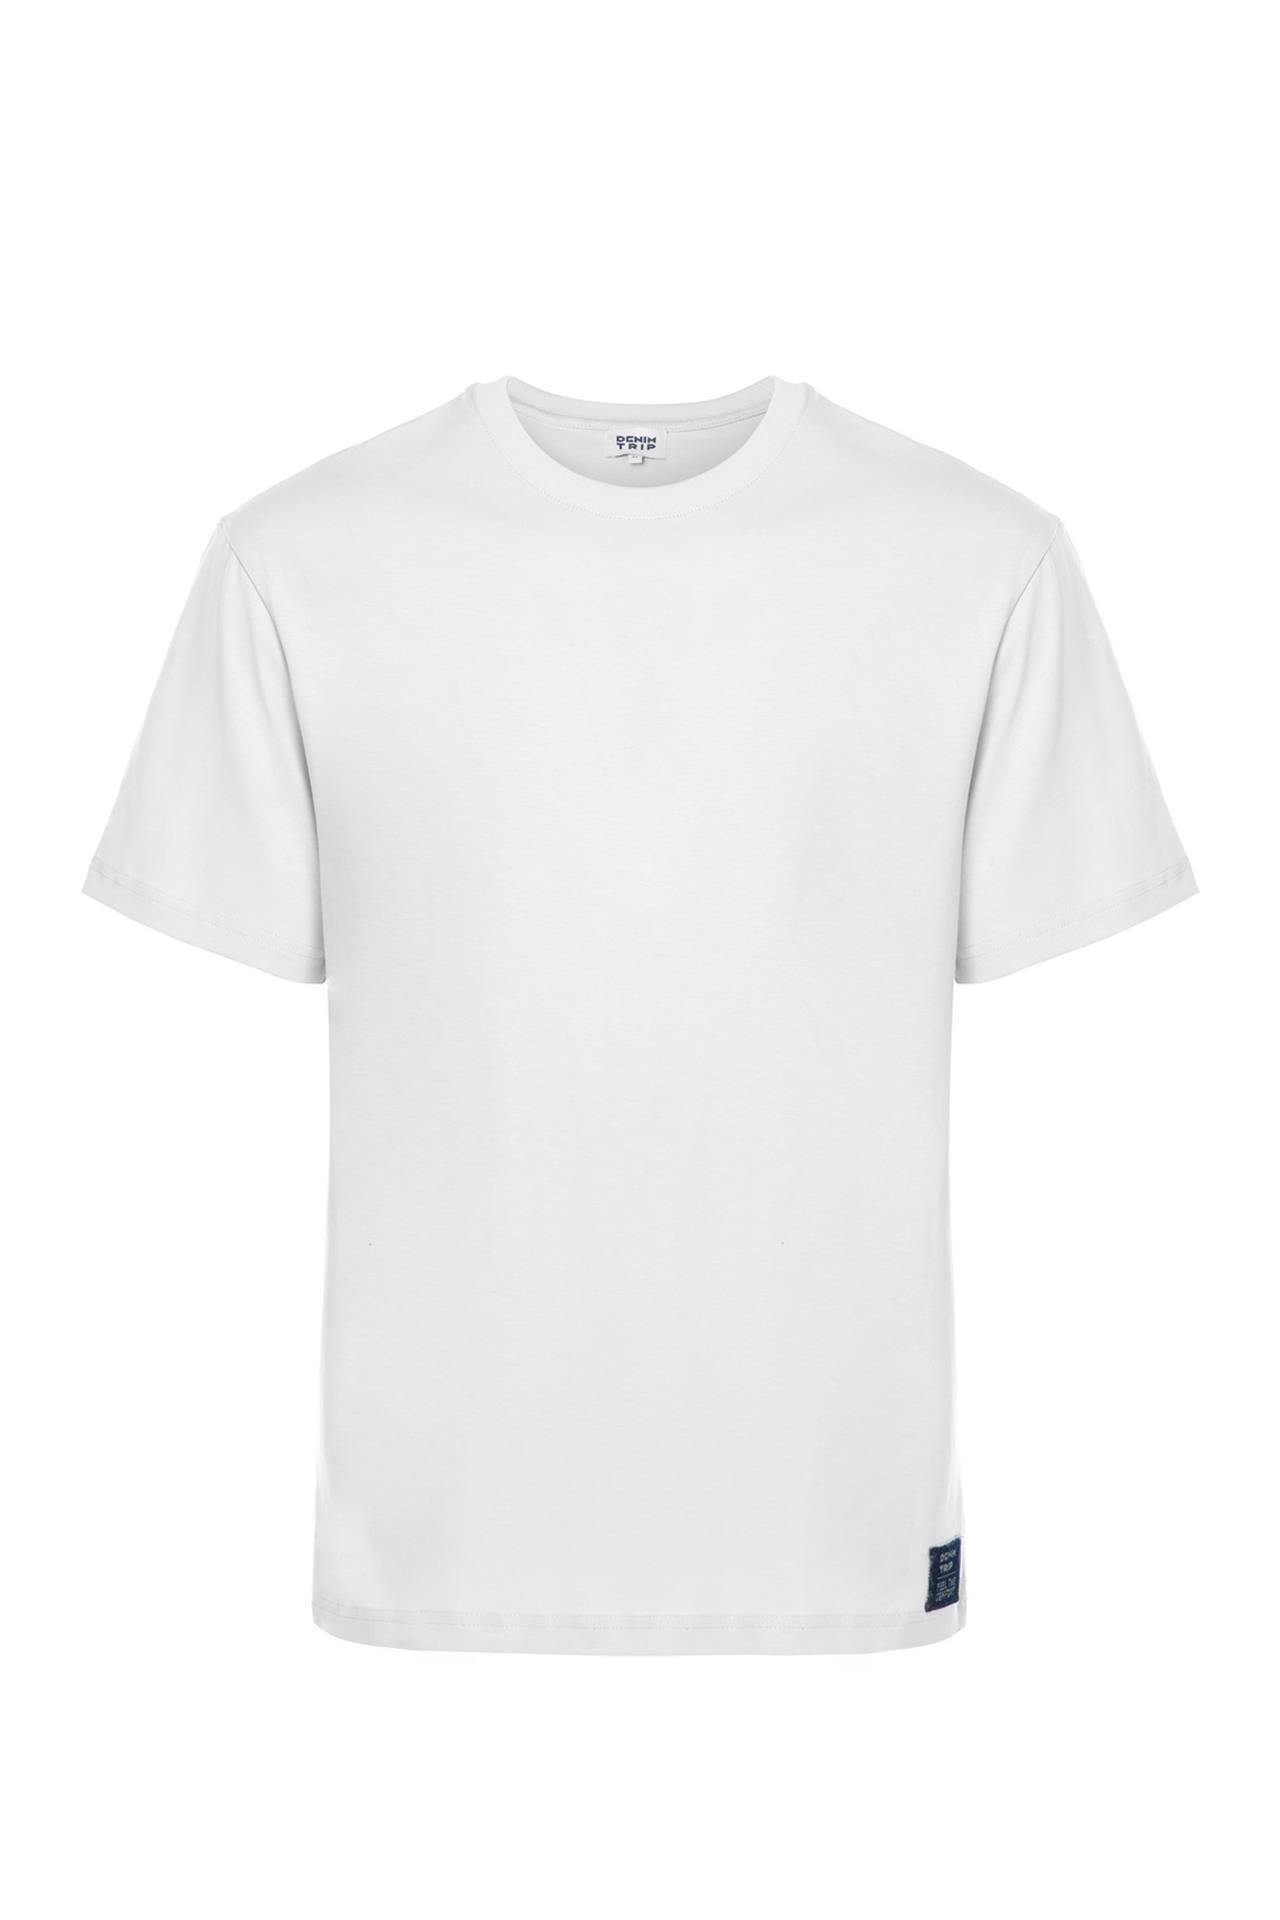 Denim Trip jean kombininiz: Pamuklu düz beyaz tshirt